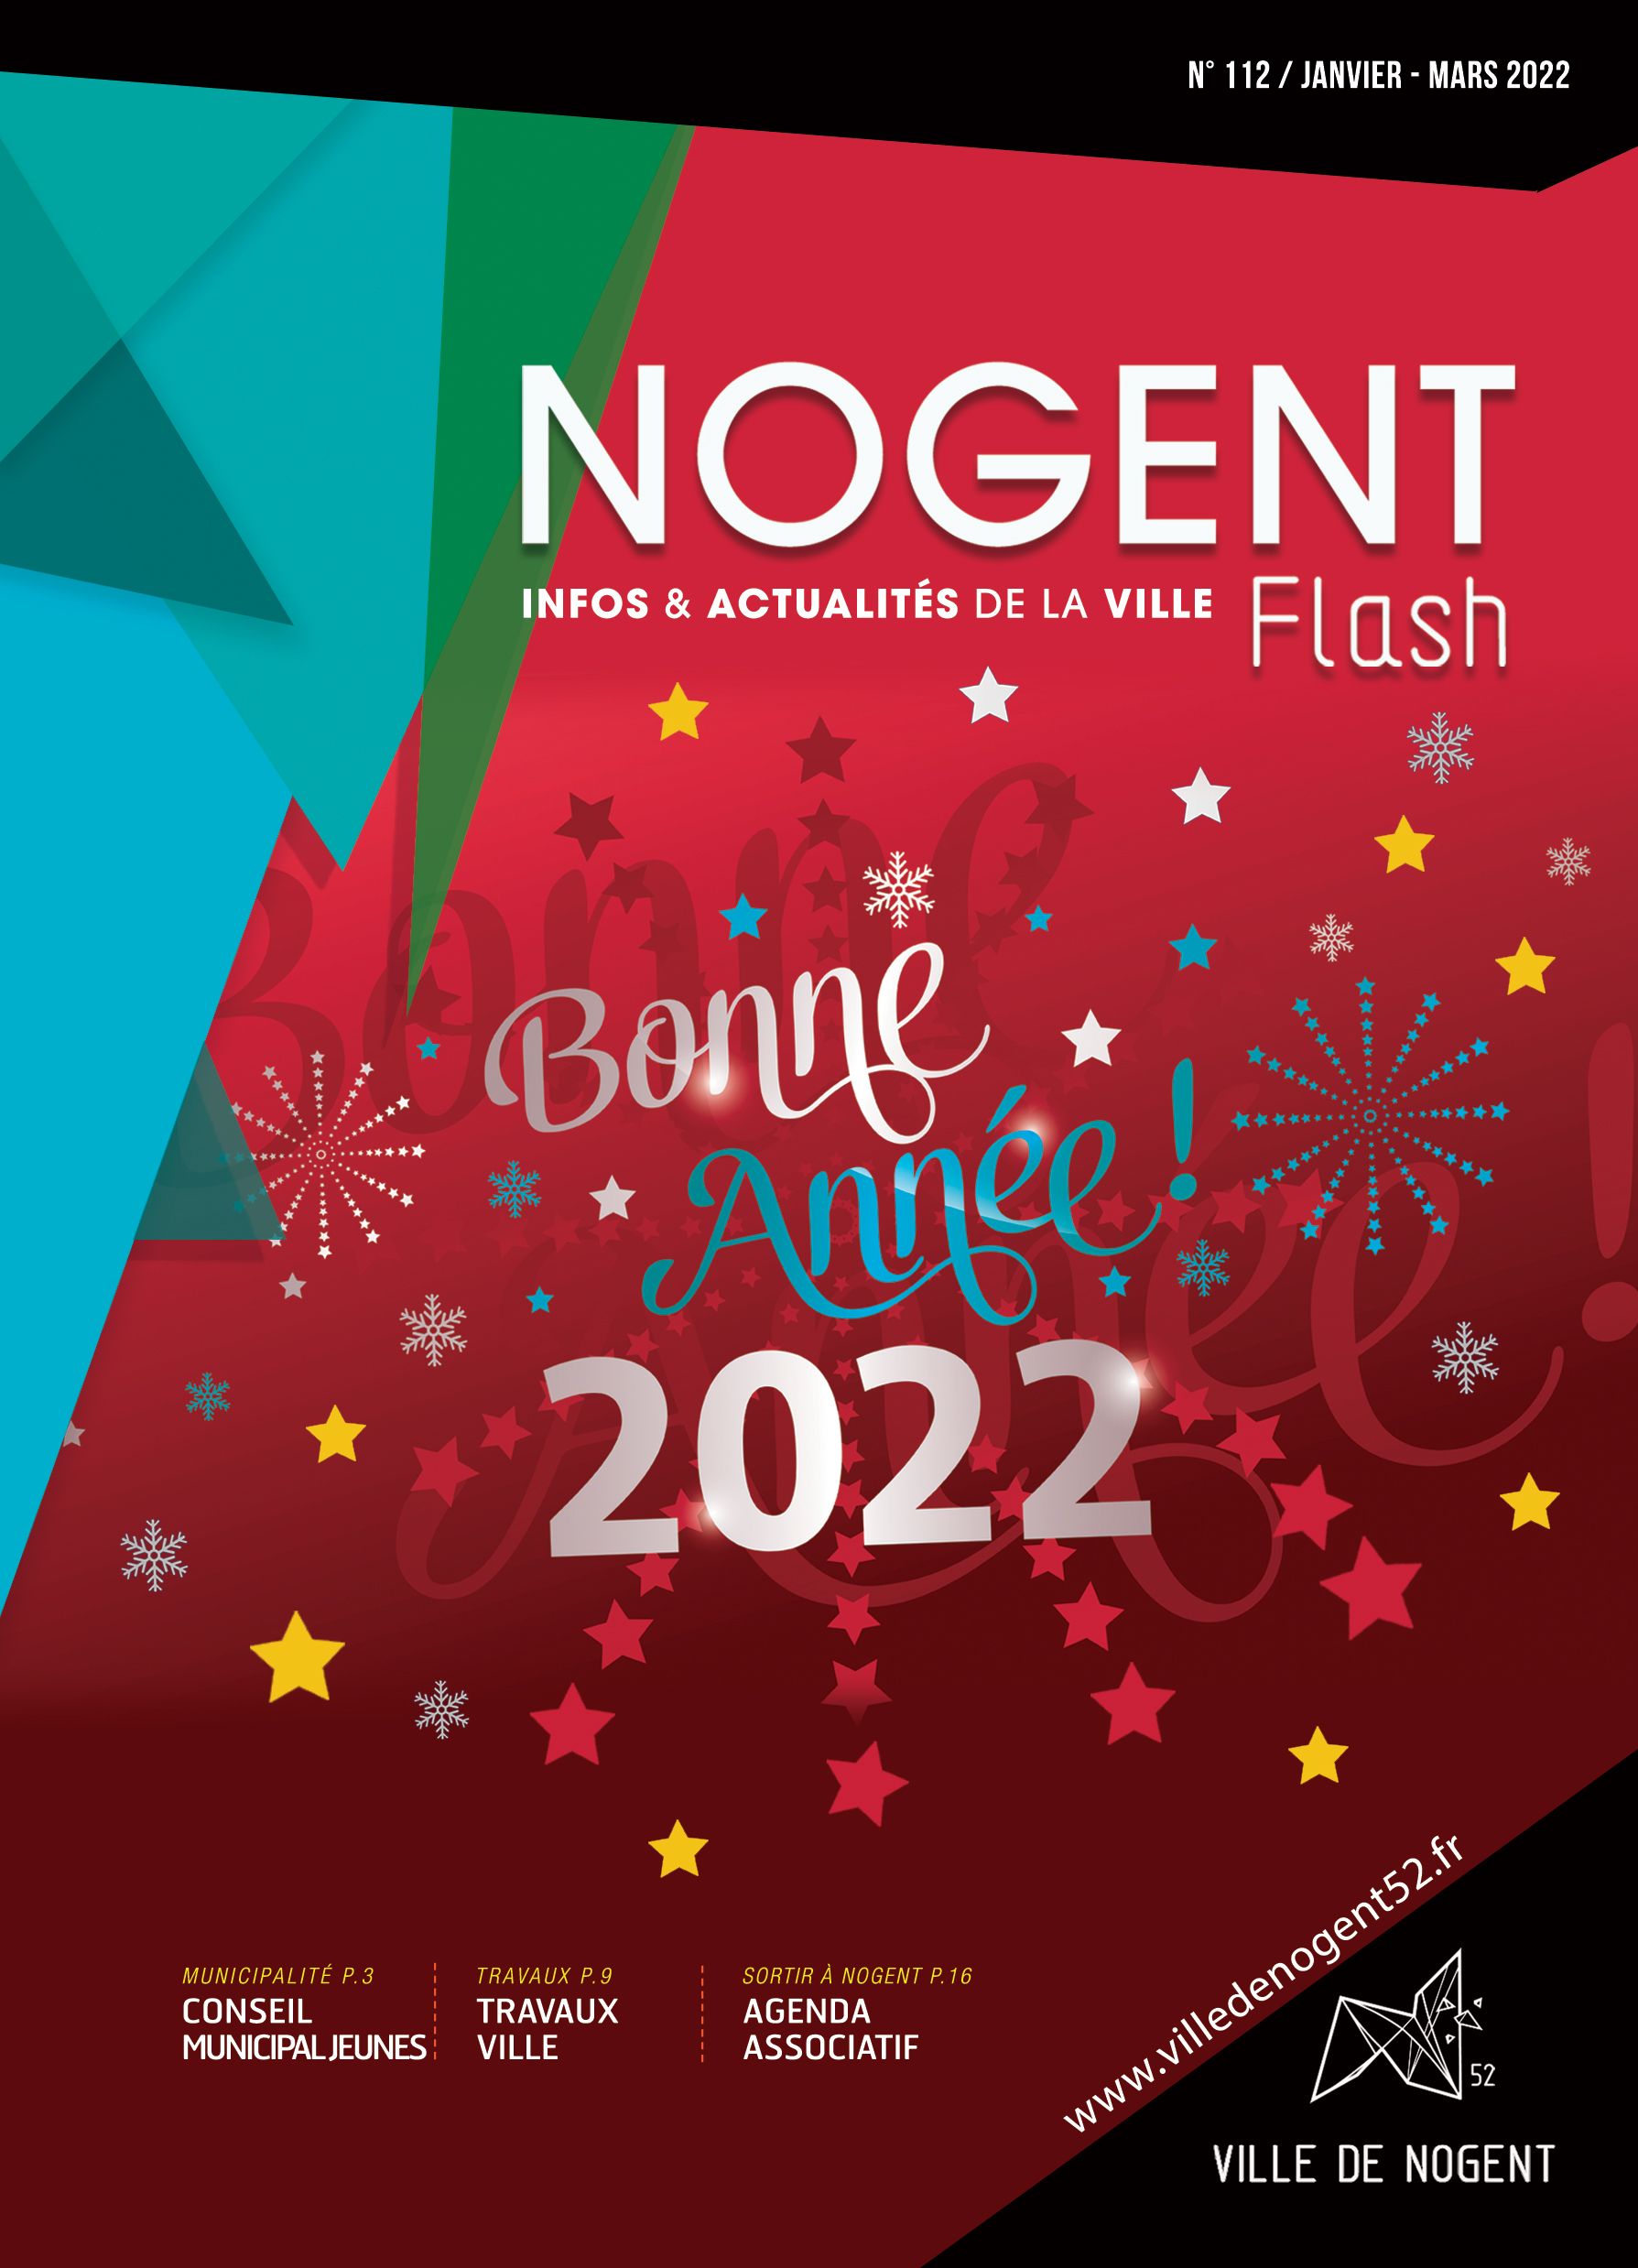 Nogent Flash #112